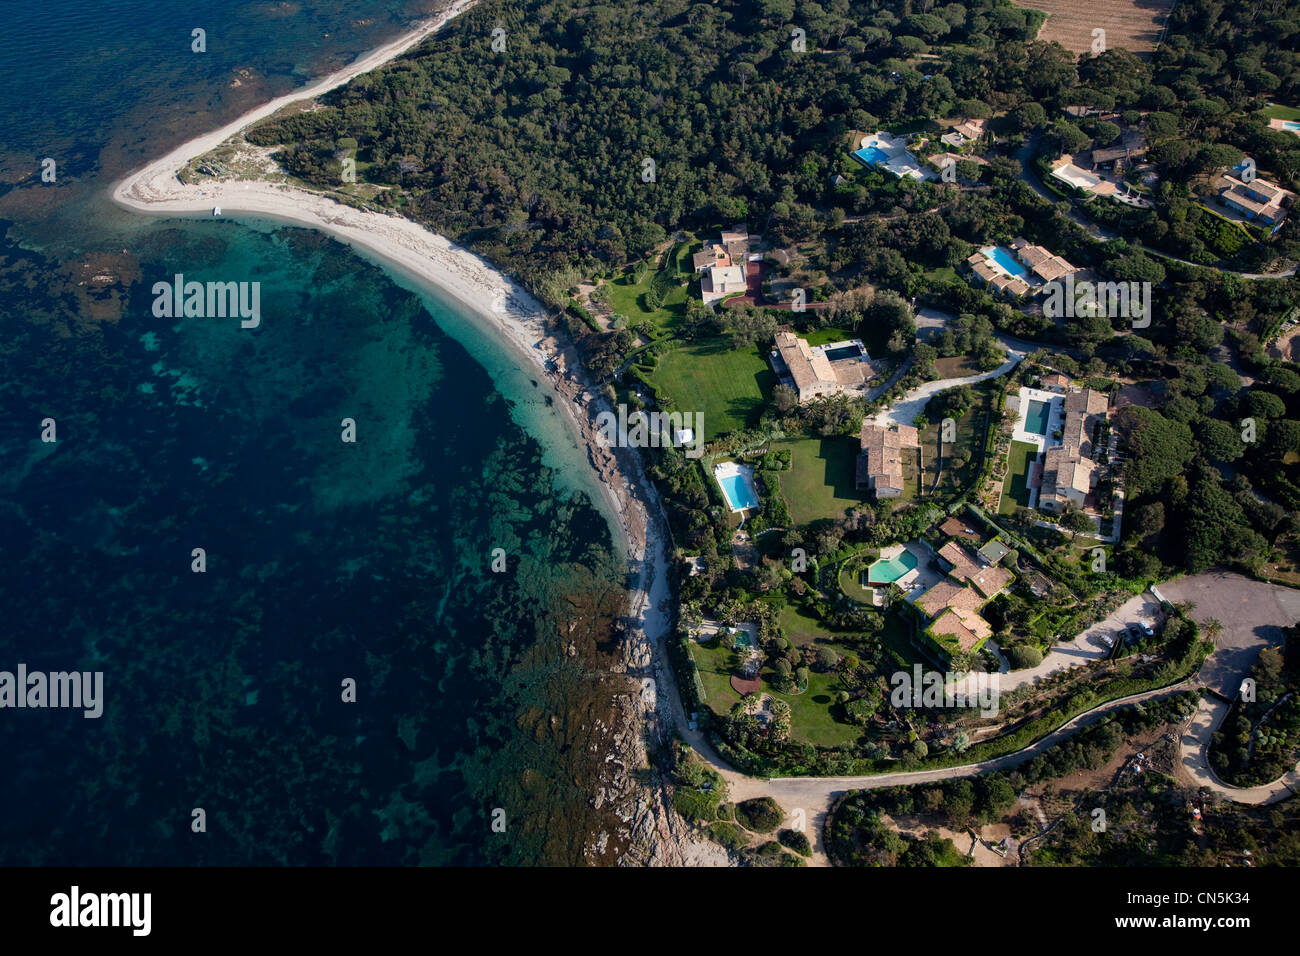 Francia, Var, St Tropez, Cap St Tropez e la spiaggia di Moutte, parchi di St Tropez, ville dei ricchi individui (vista aerea) Foto Stock